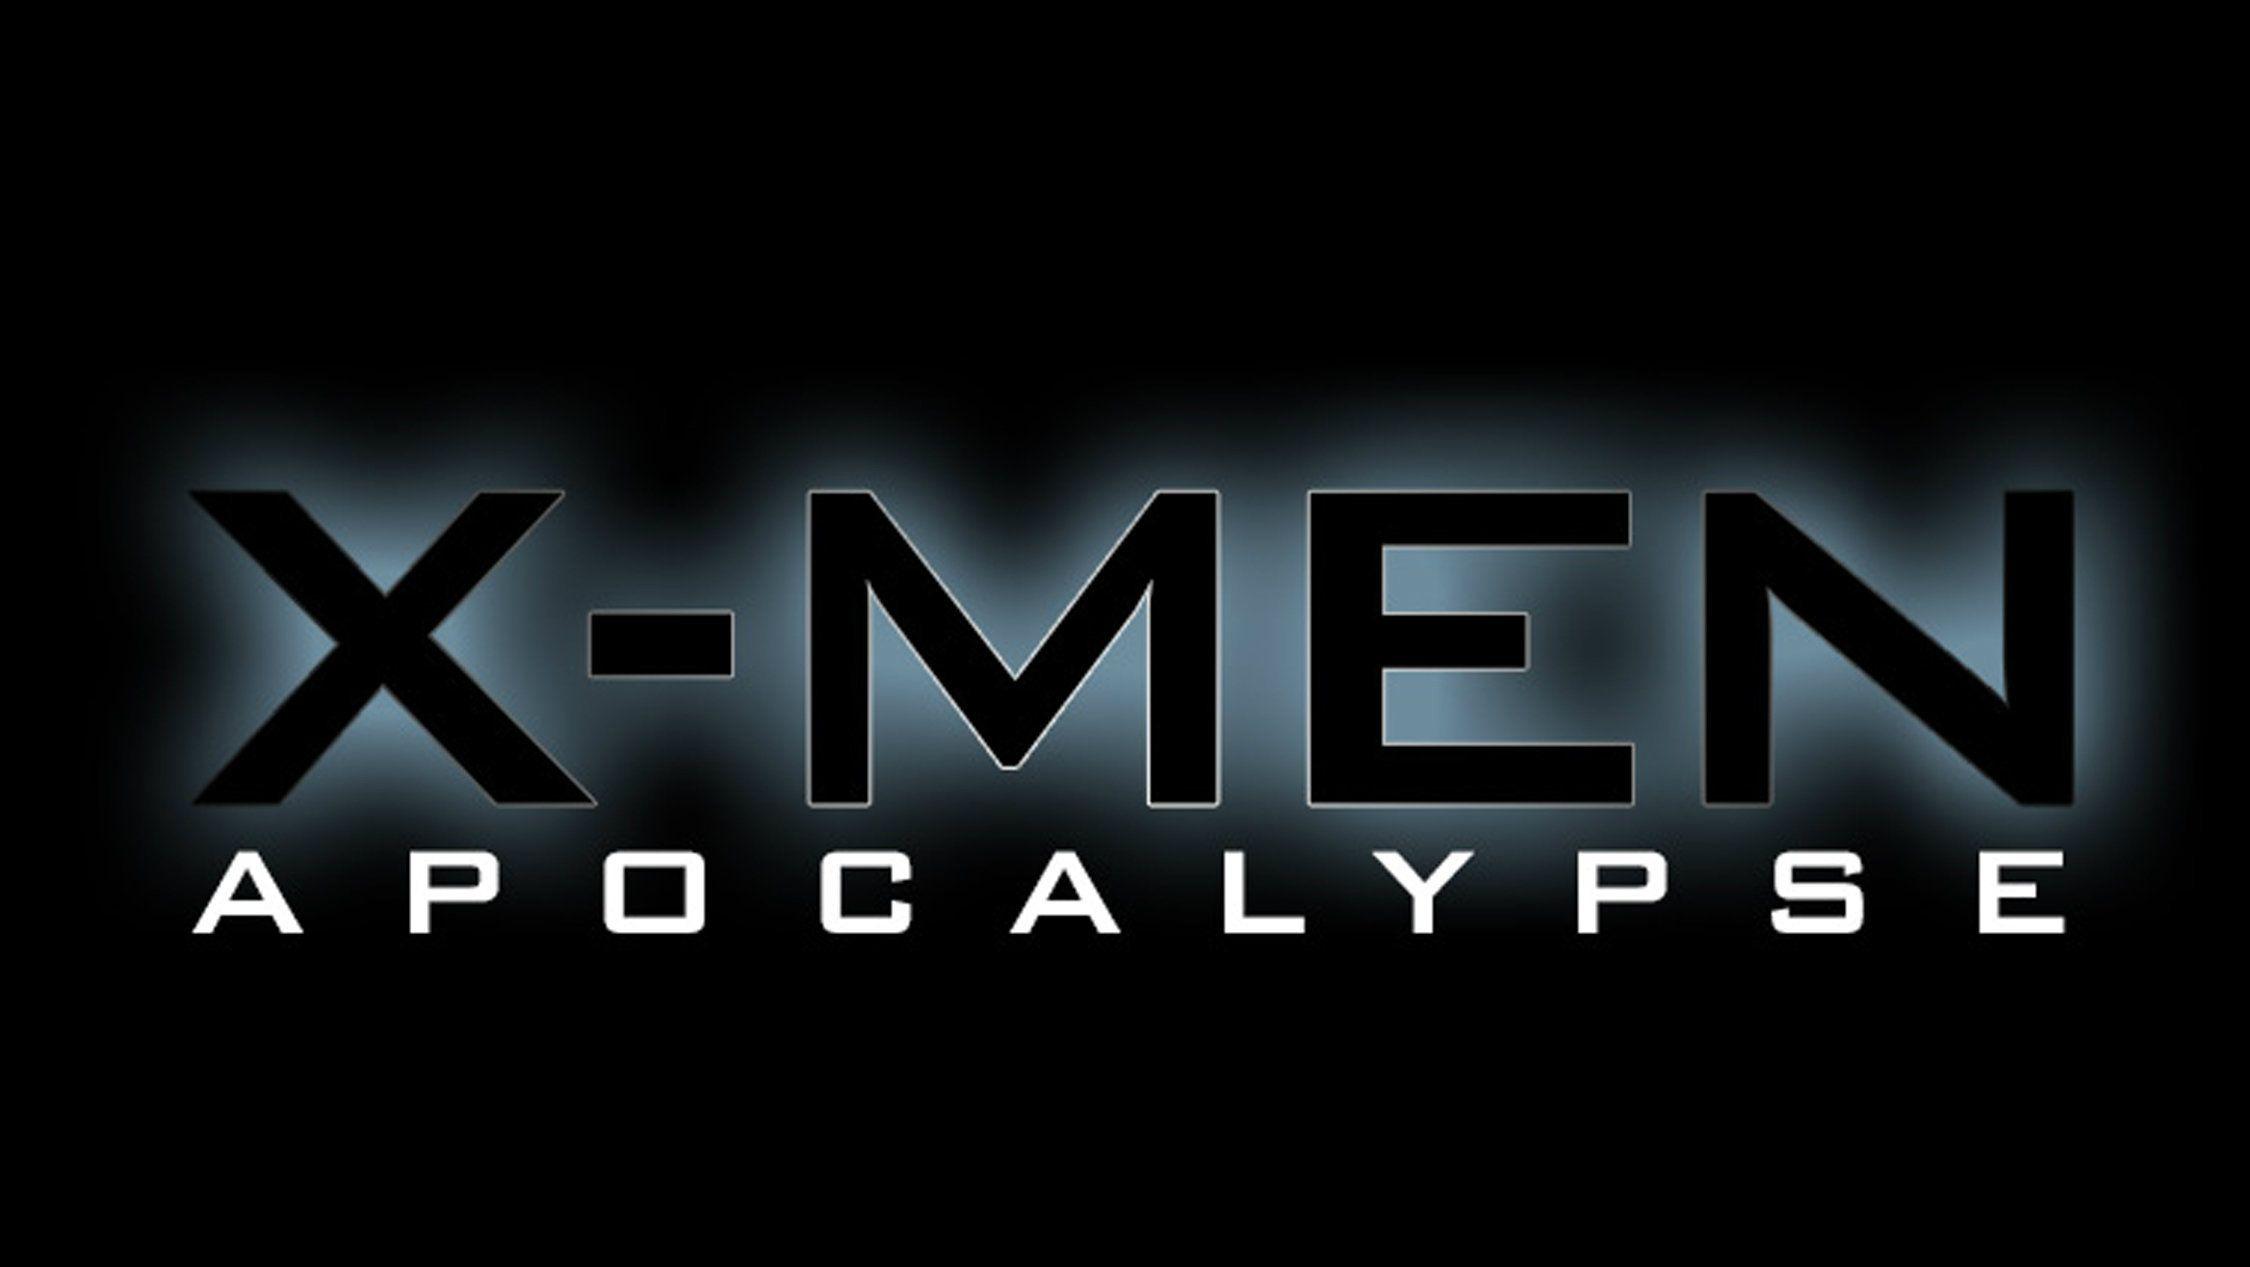 X Men: Apocalypse Wallpaper Image Photo Picture Background